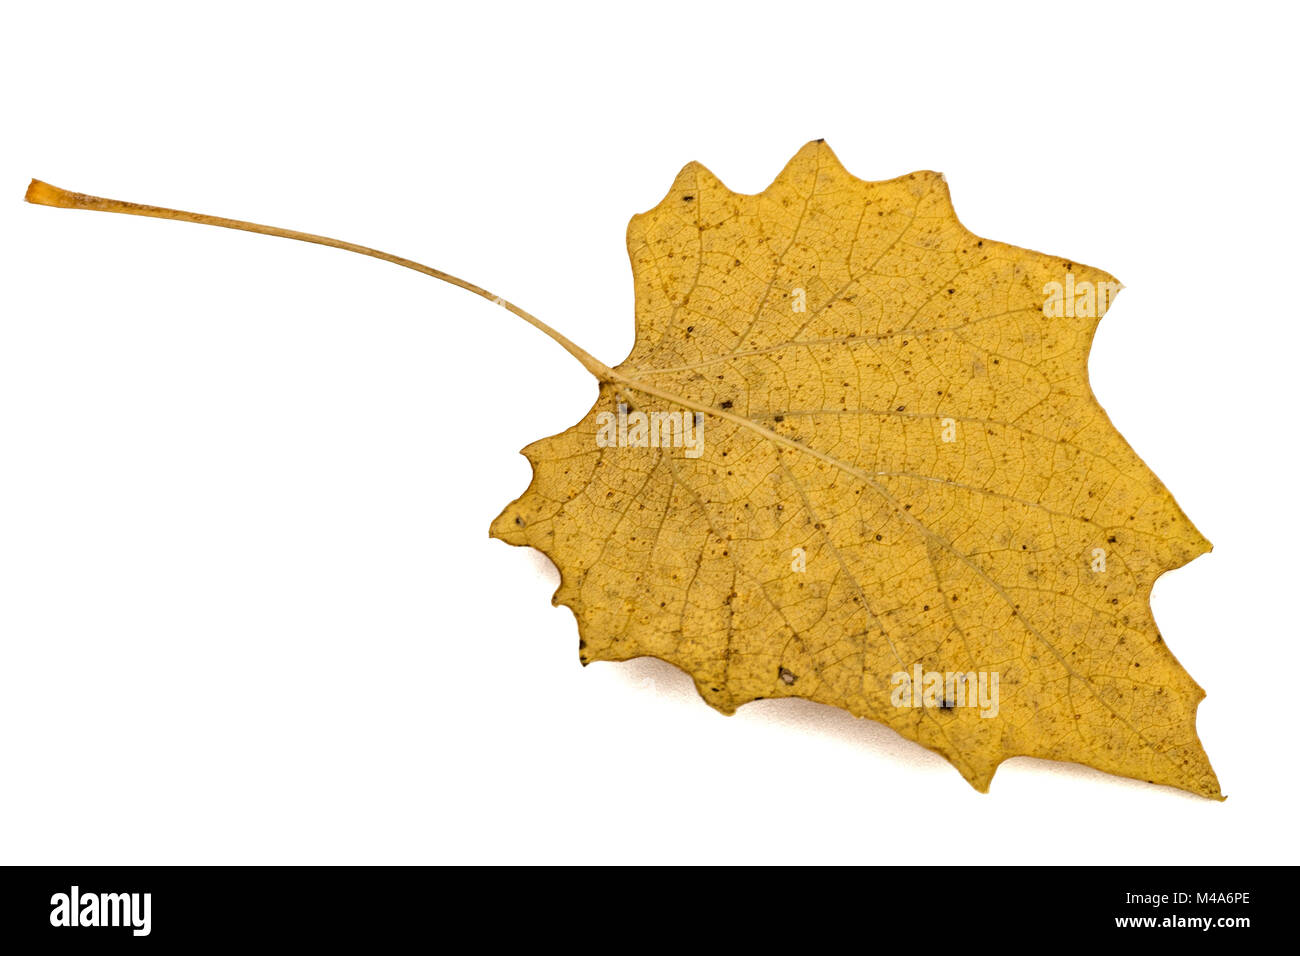 Yellow the fallen autumn leaf, isolated on white background Stock Photo